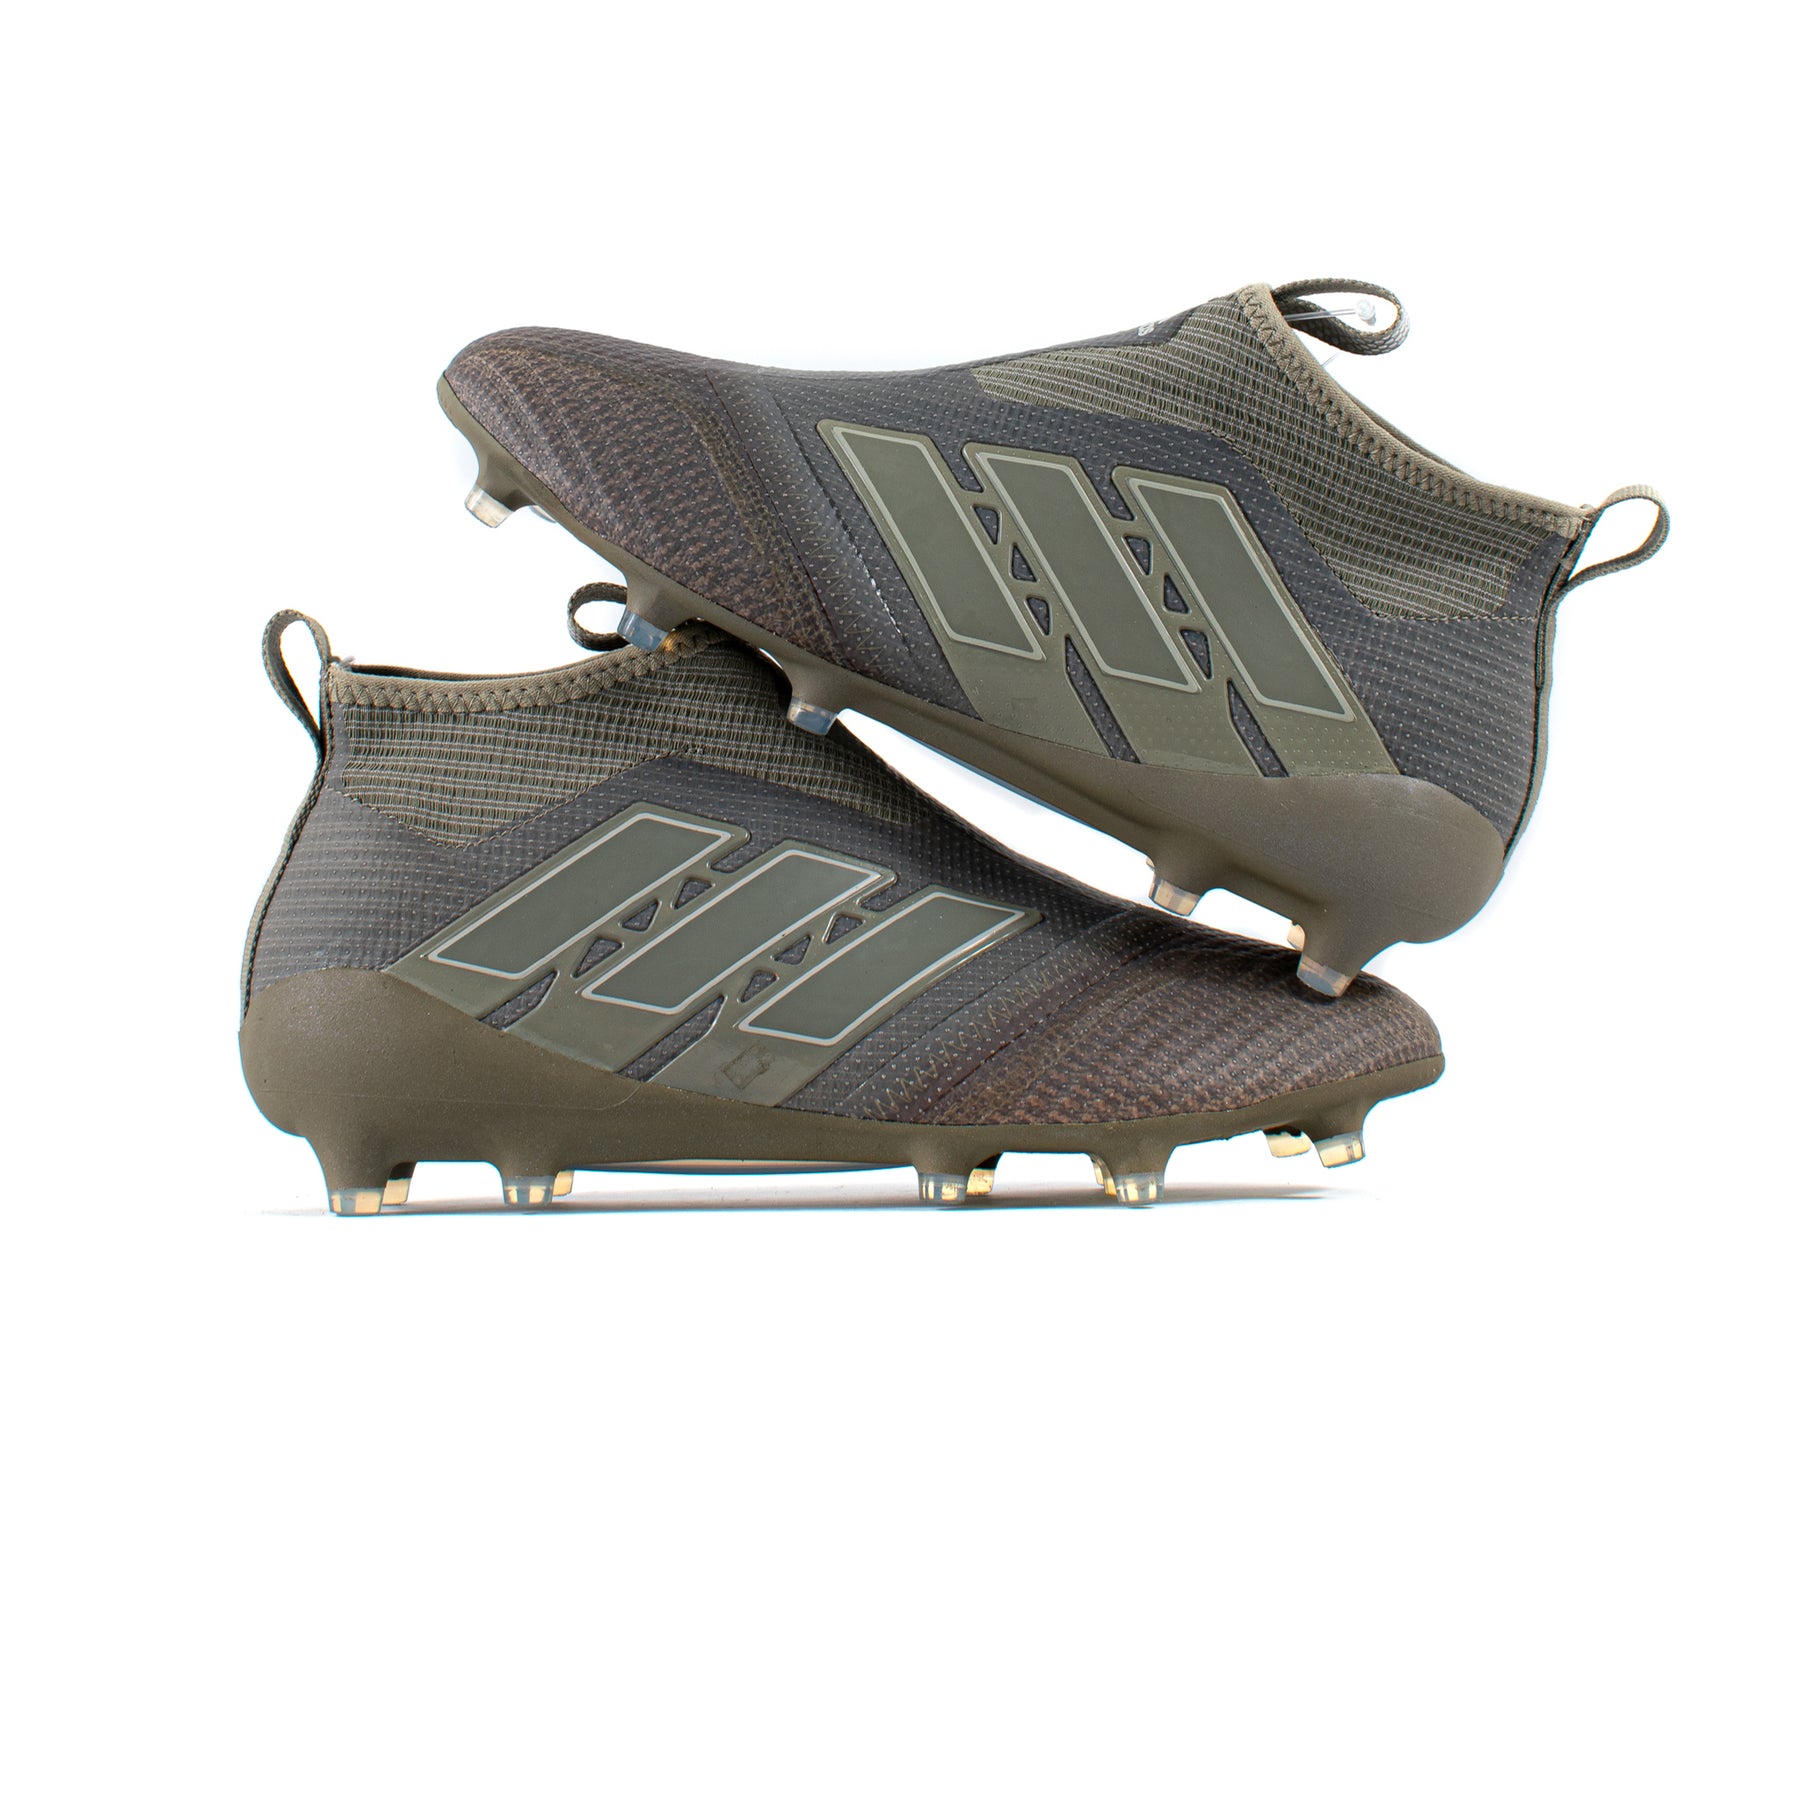 Adidas 17+ PureControl Grey – Classic Soccer Cleats